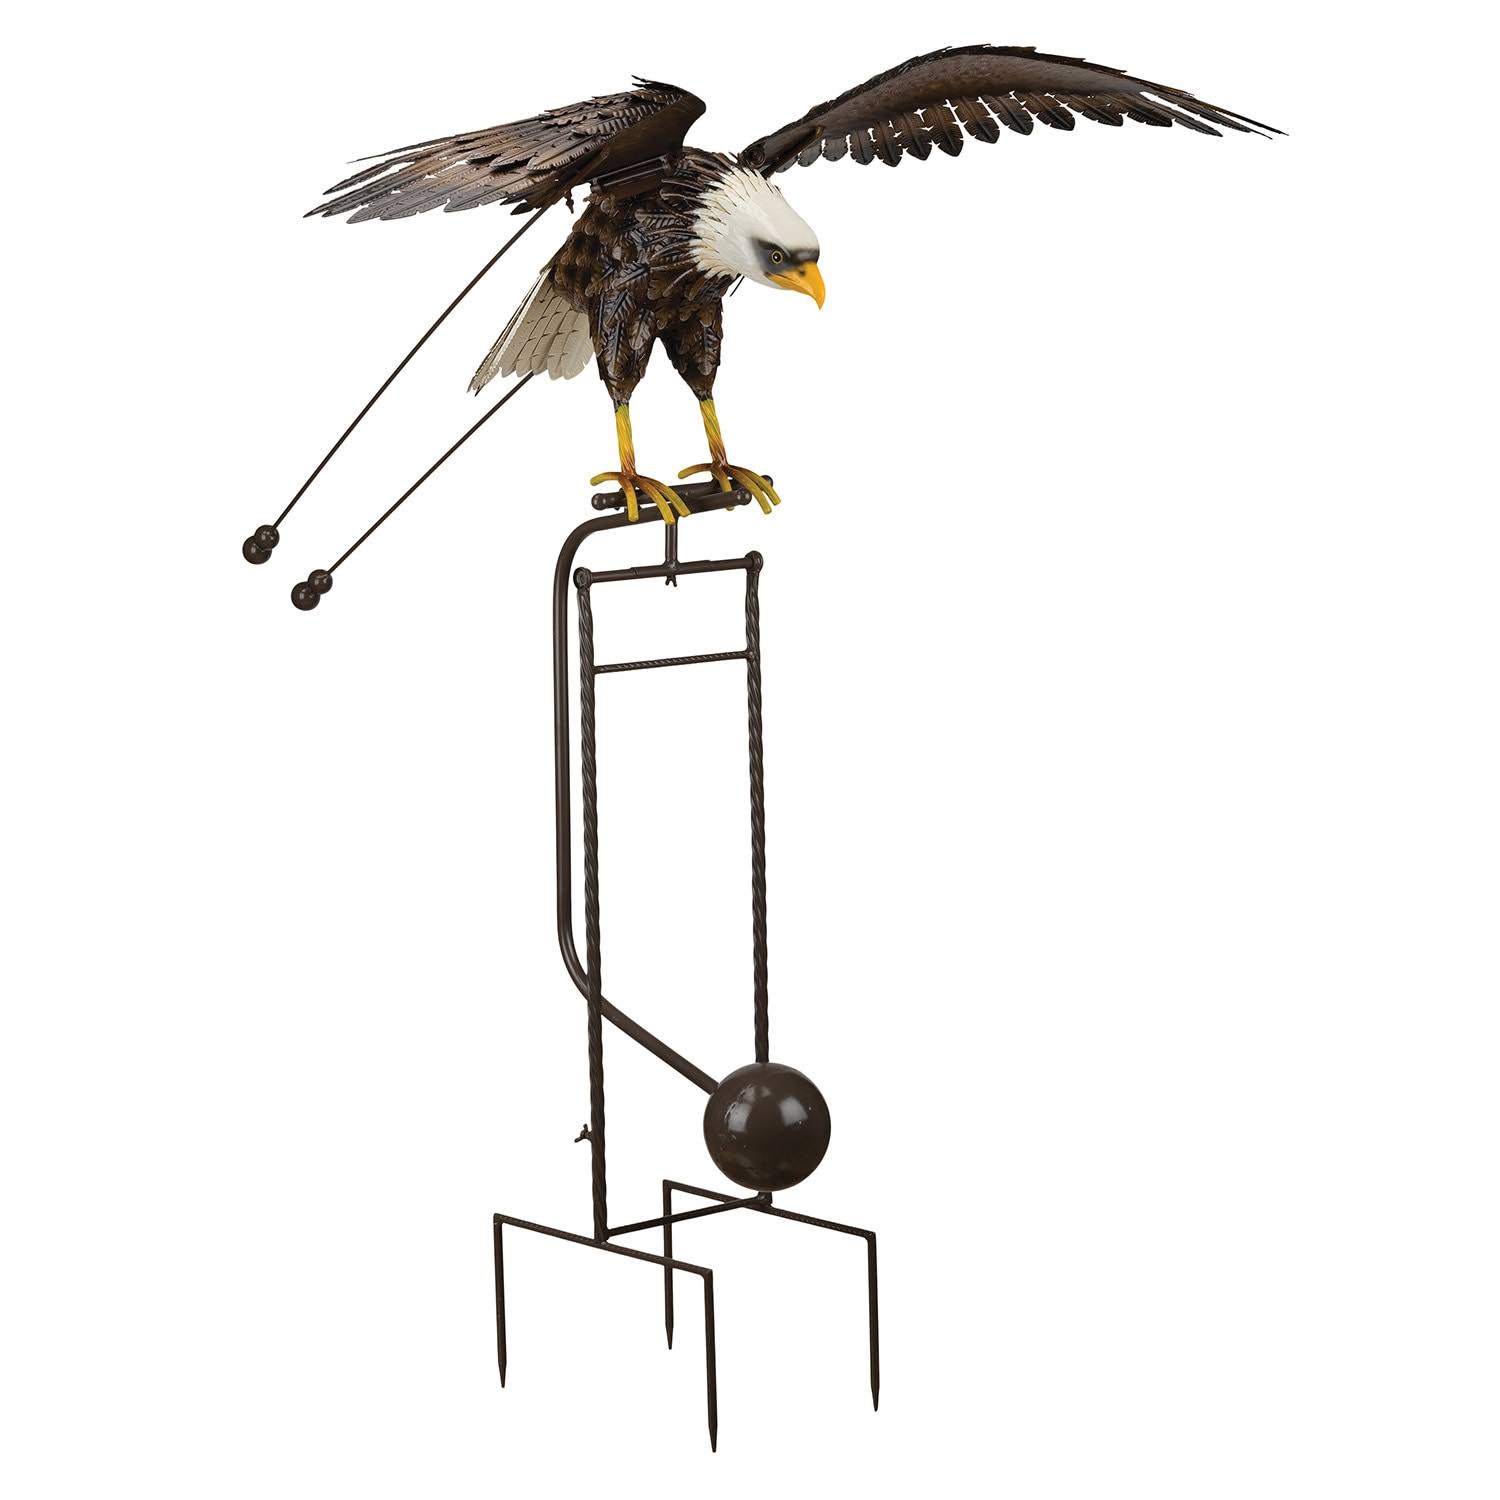 Regal Art & Gift REGAL12960 Eagle Bird Statuary Rocker Stake